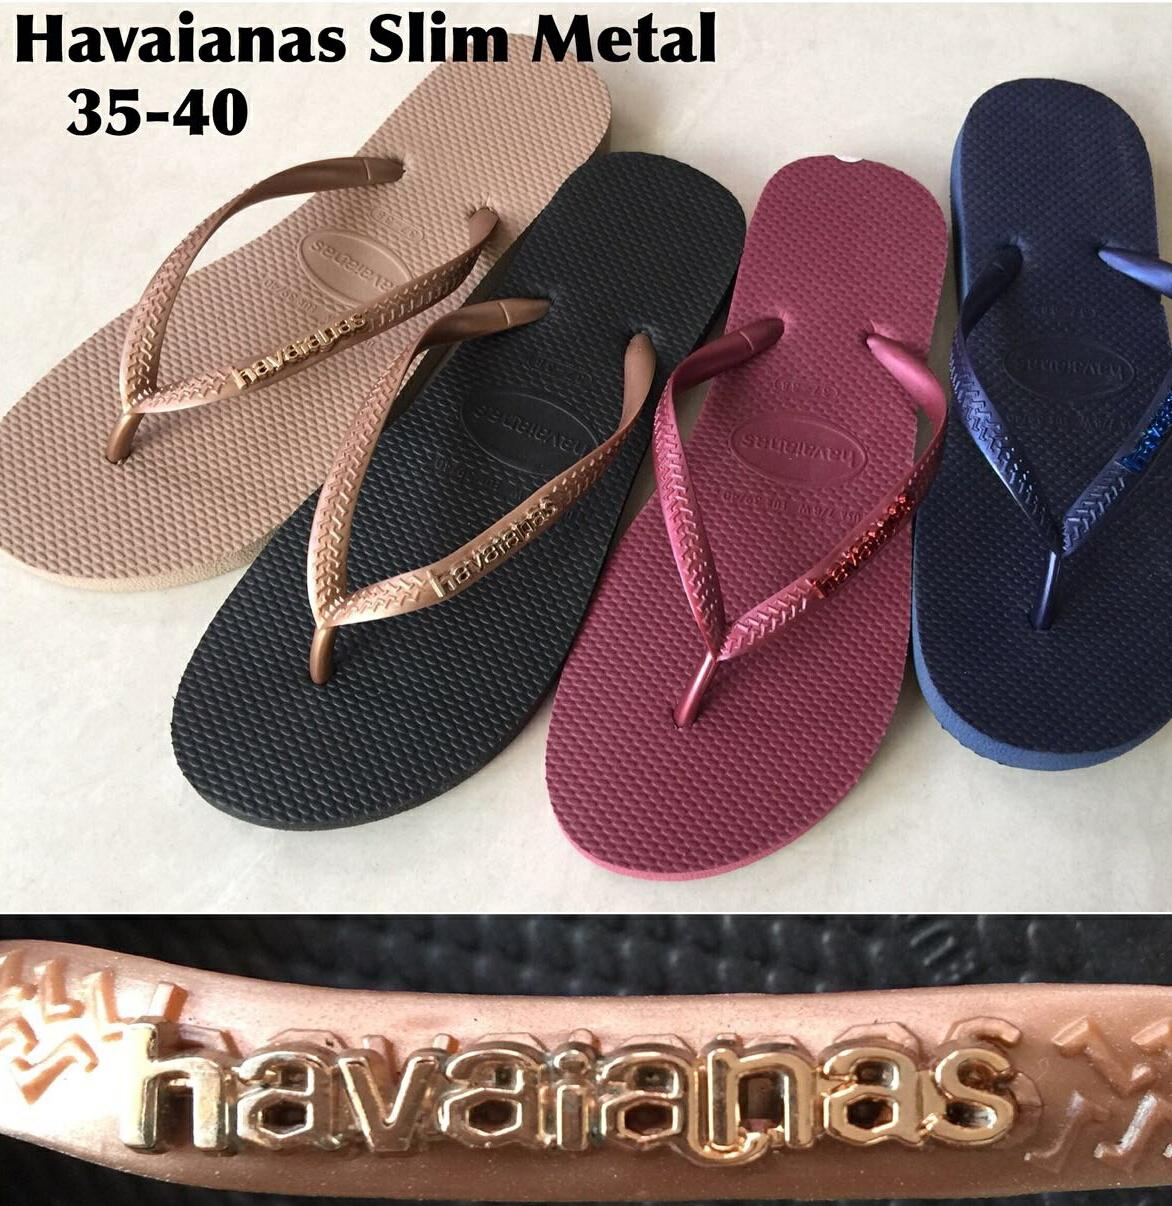 gambar sandal havaianas